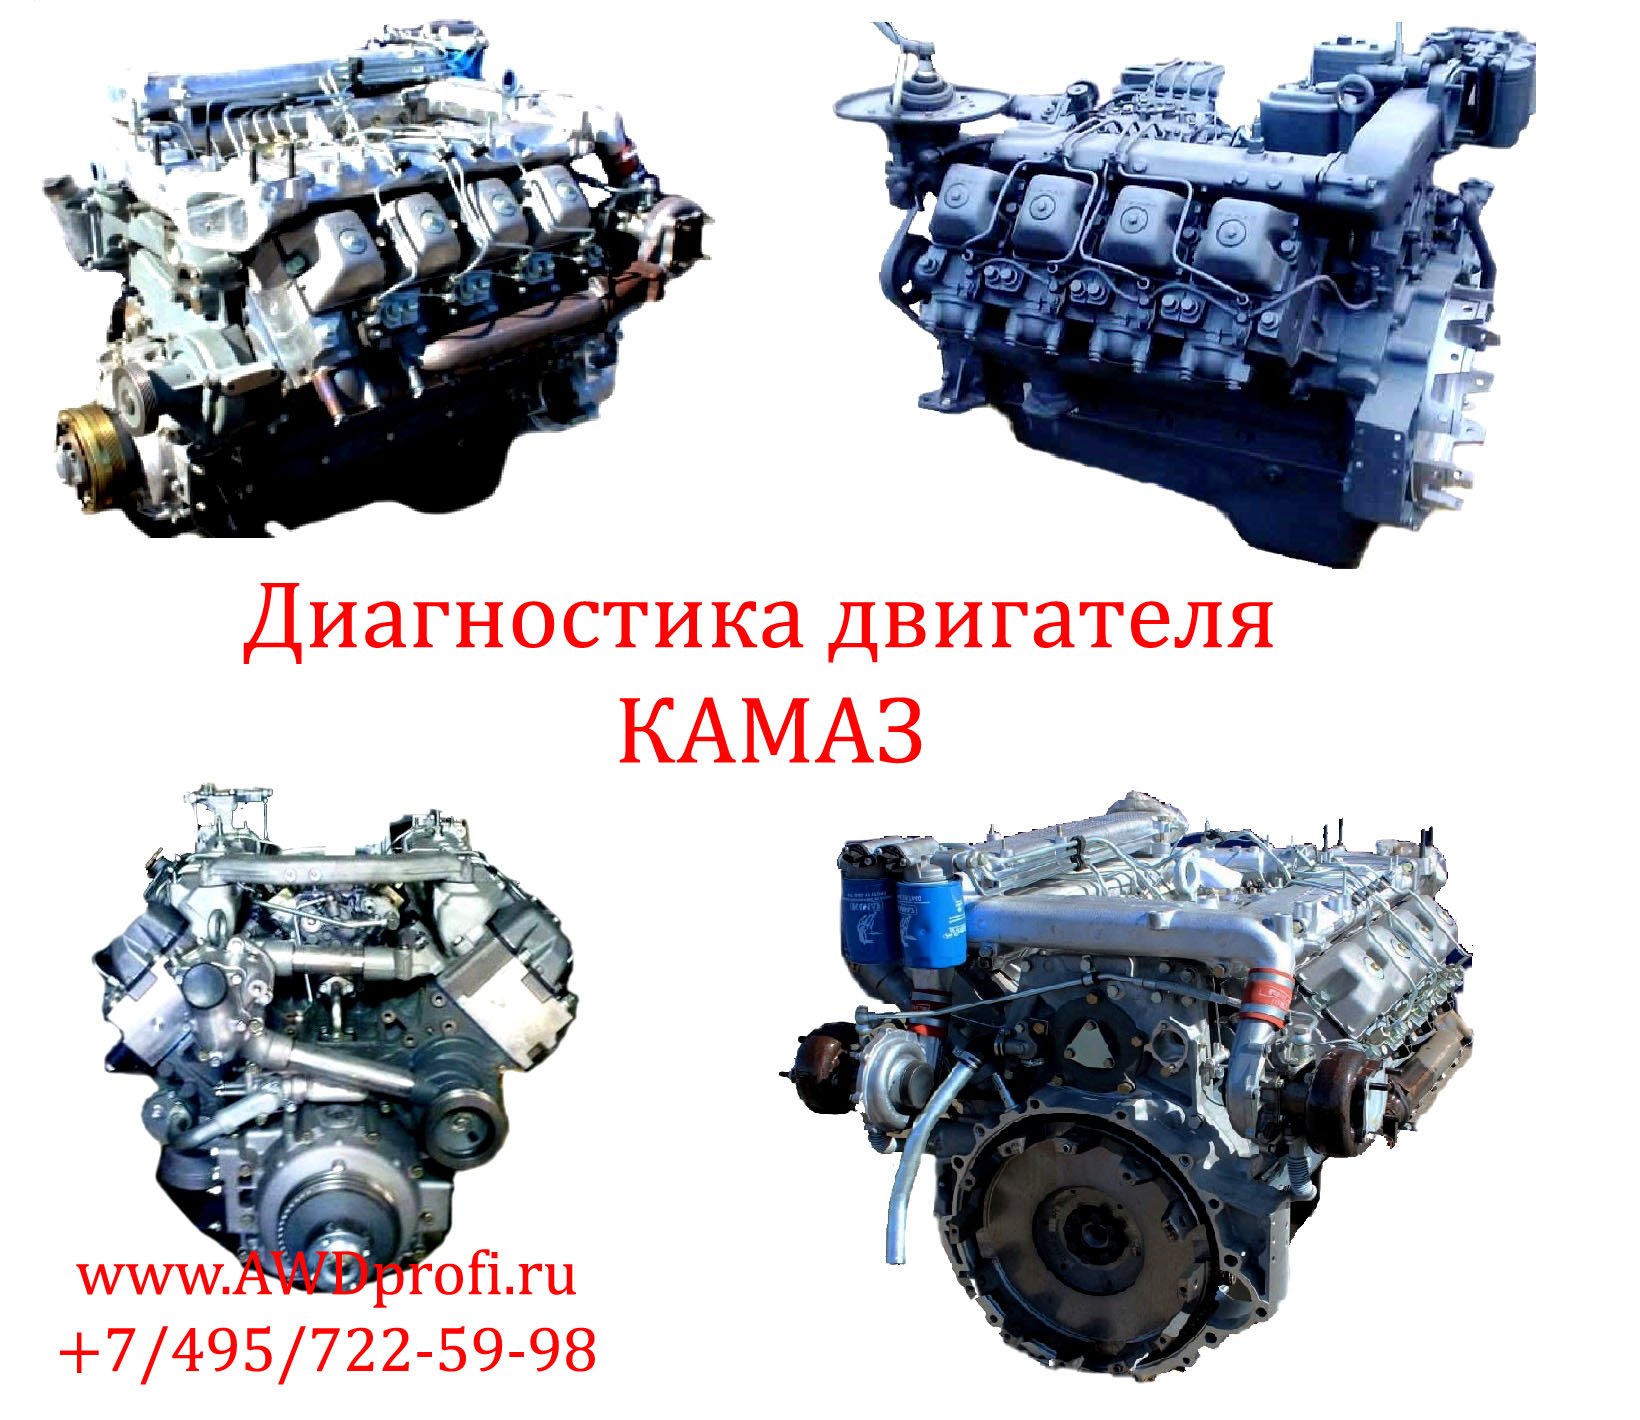 Звук двигателя камаза. Диагностика двигателя КАМАЗ 740. Двигатель КАМАЗ v10. Двигатель КАМАЗ 740.622-280. Диагностирование двигателя КАМАЗА 740.